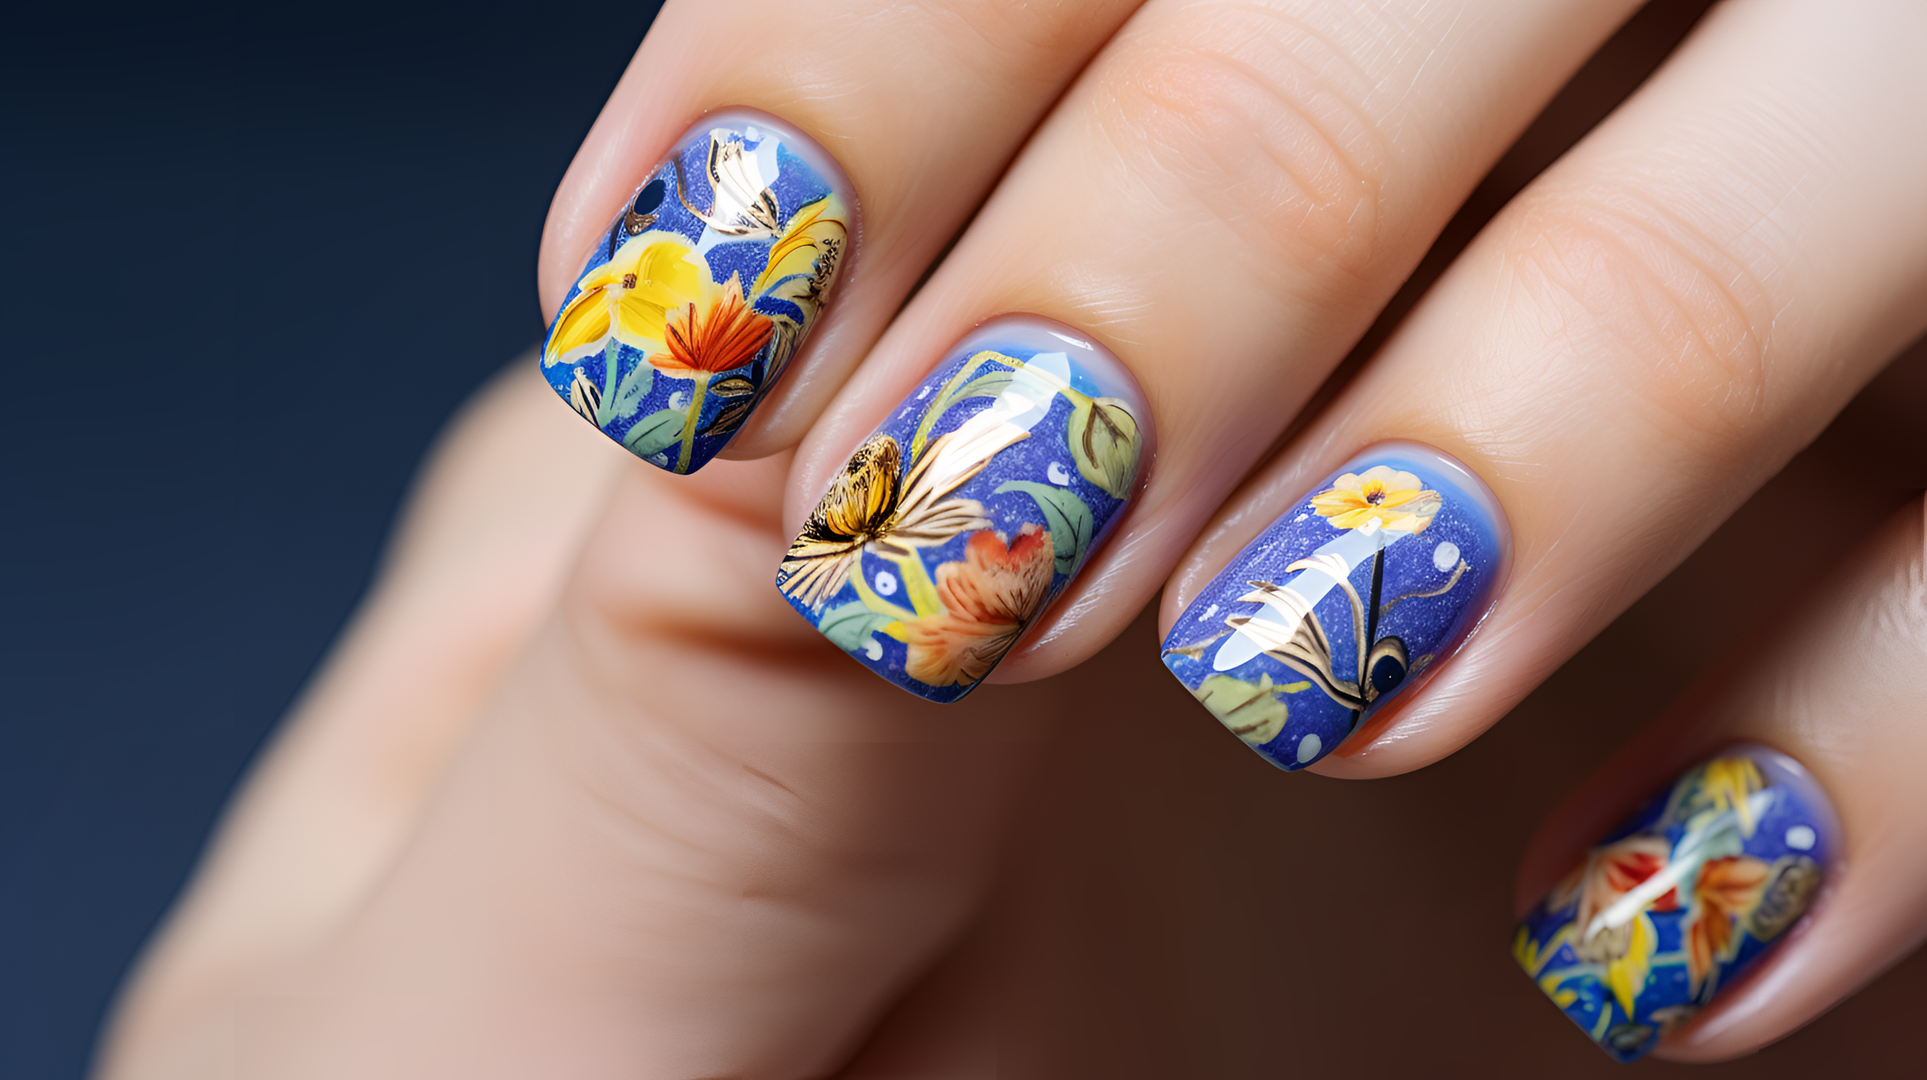 Lovely Nail & Spa Nail art Gel nails Manicure, nail poster, purple, hand,  cosmetics png | Klipartz